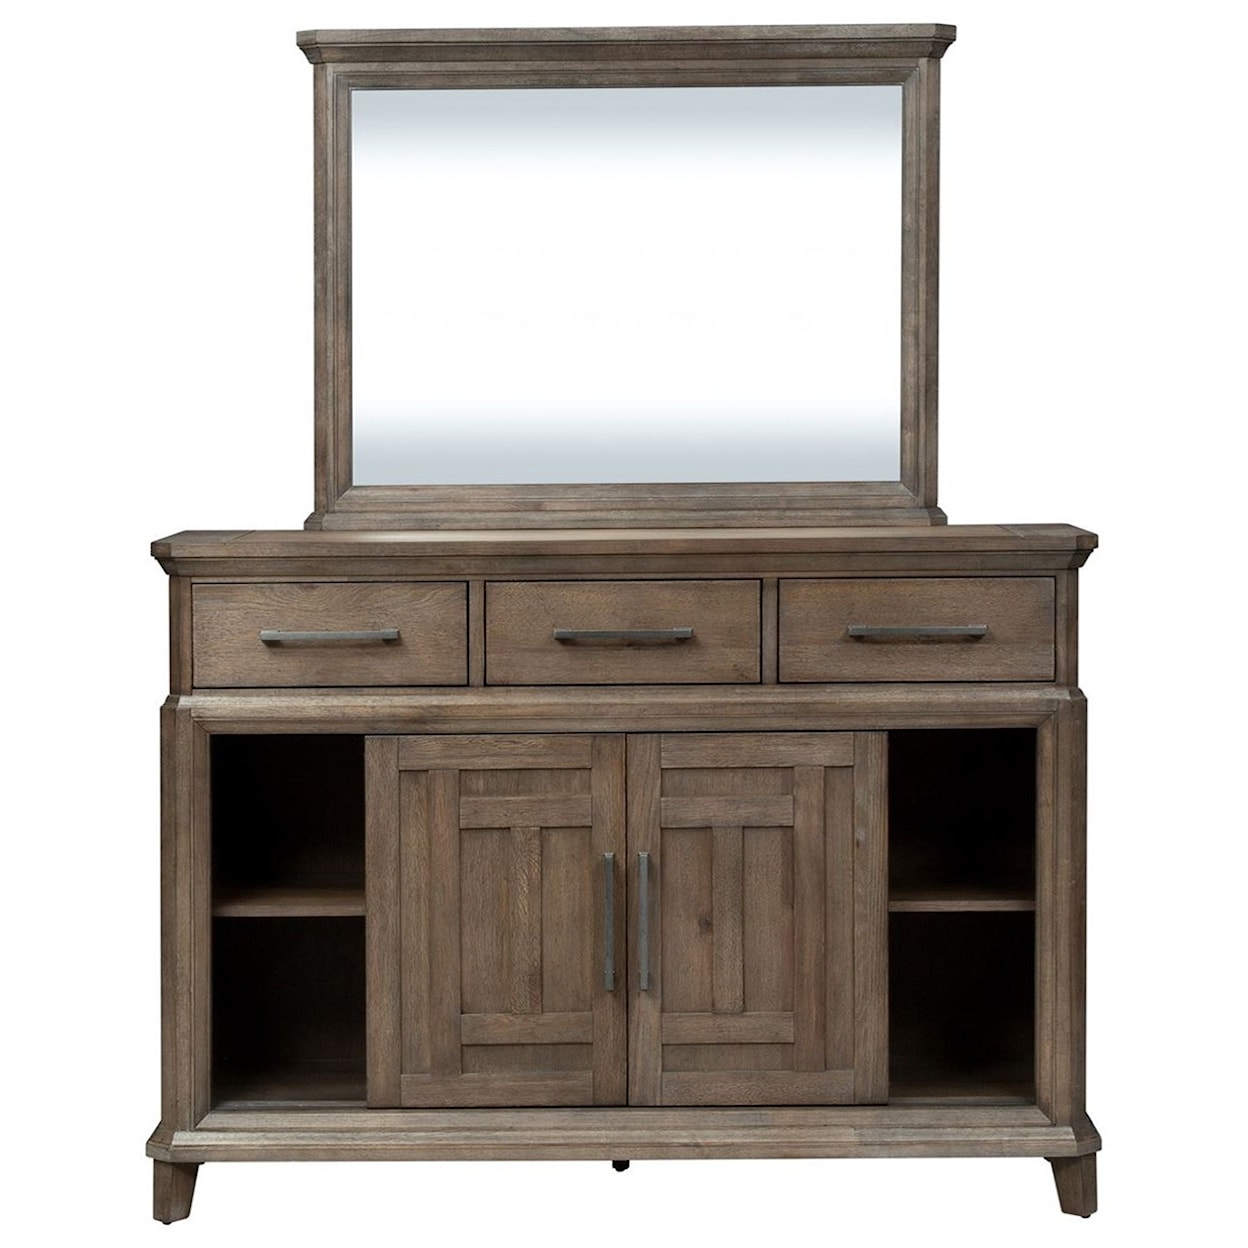 Liberty Furniture Artisan Prairie 6 Drawer 2 Door Dresser with Mirror